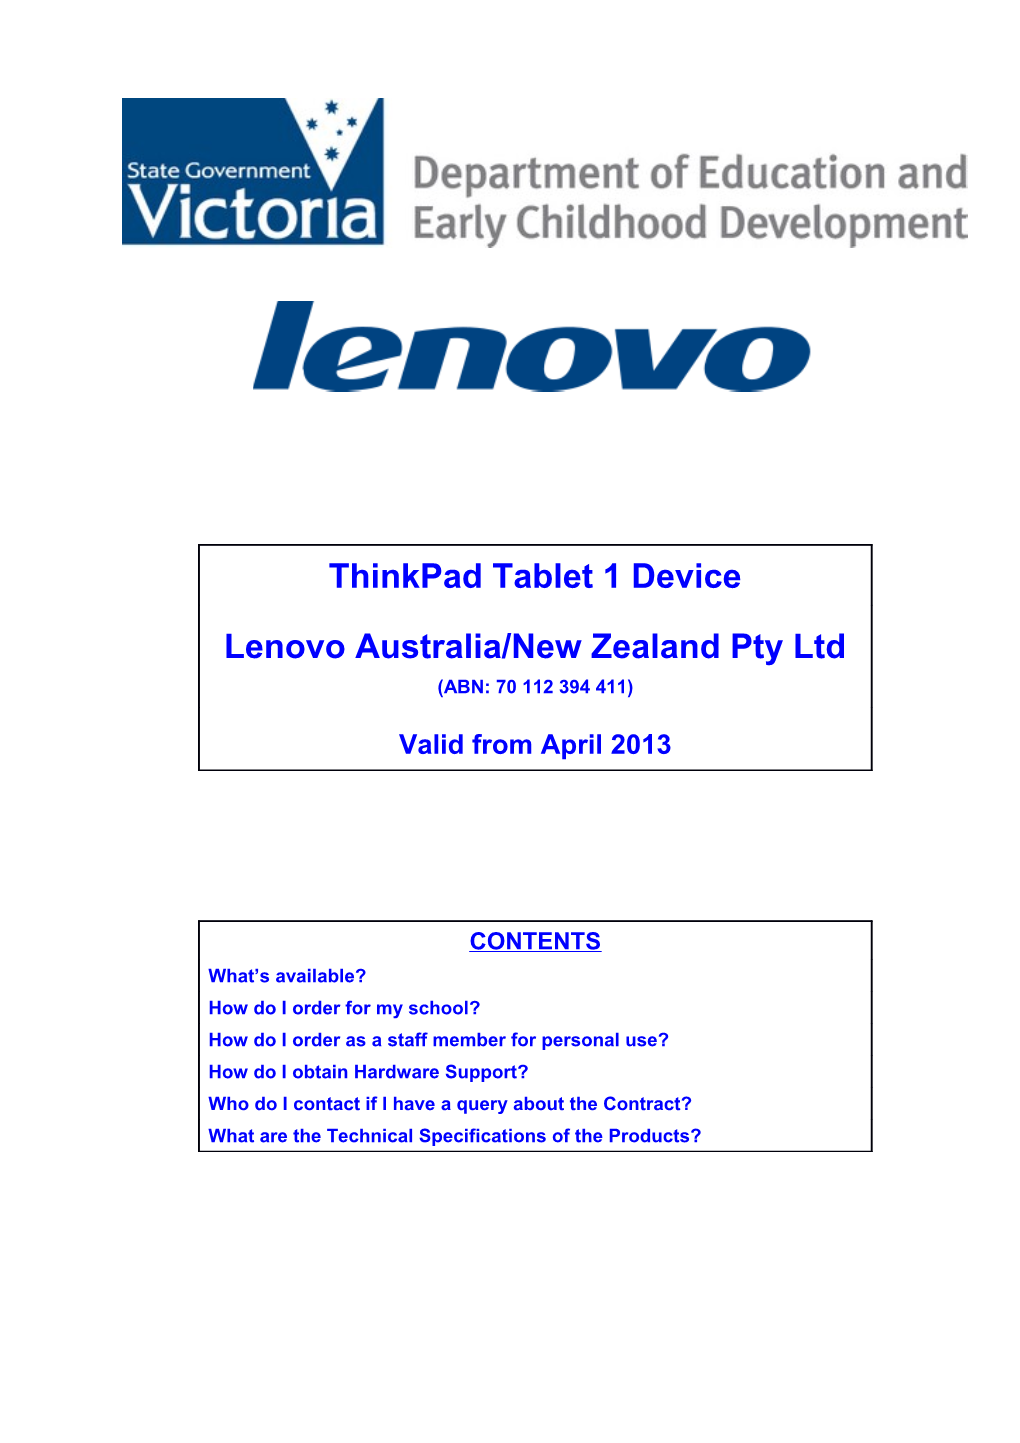 Lenovo Notebook Pricing